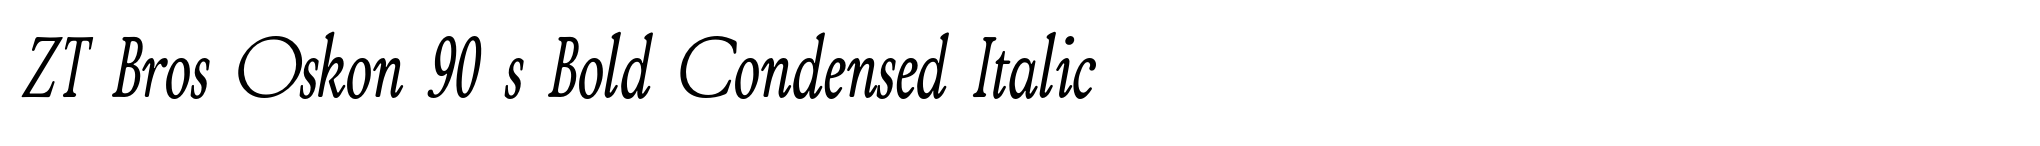 ZT Bros Oskon 90 s Bold Condensed Italic image